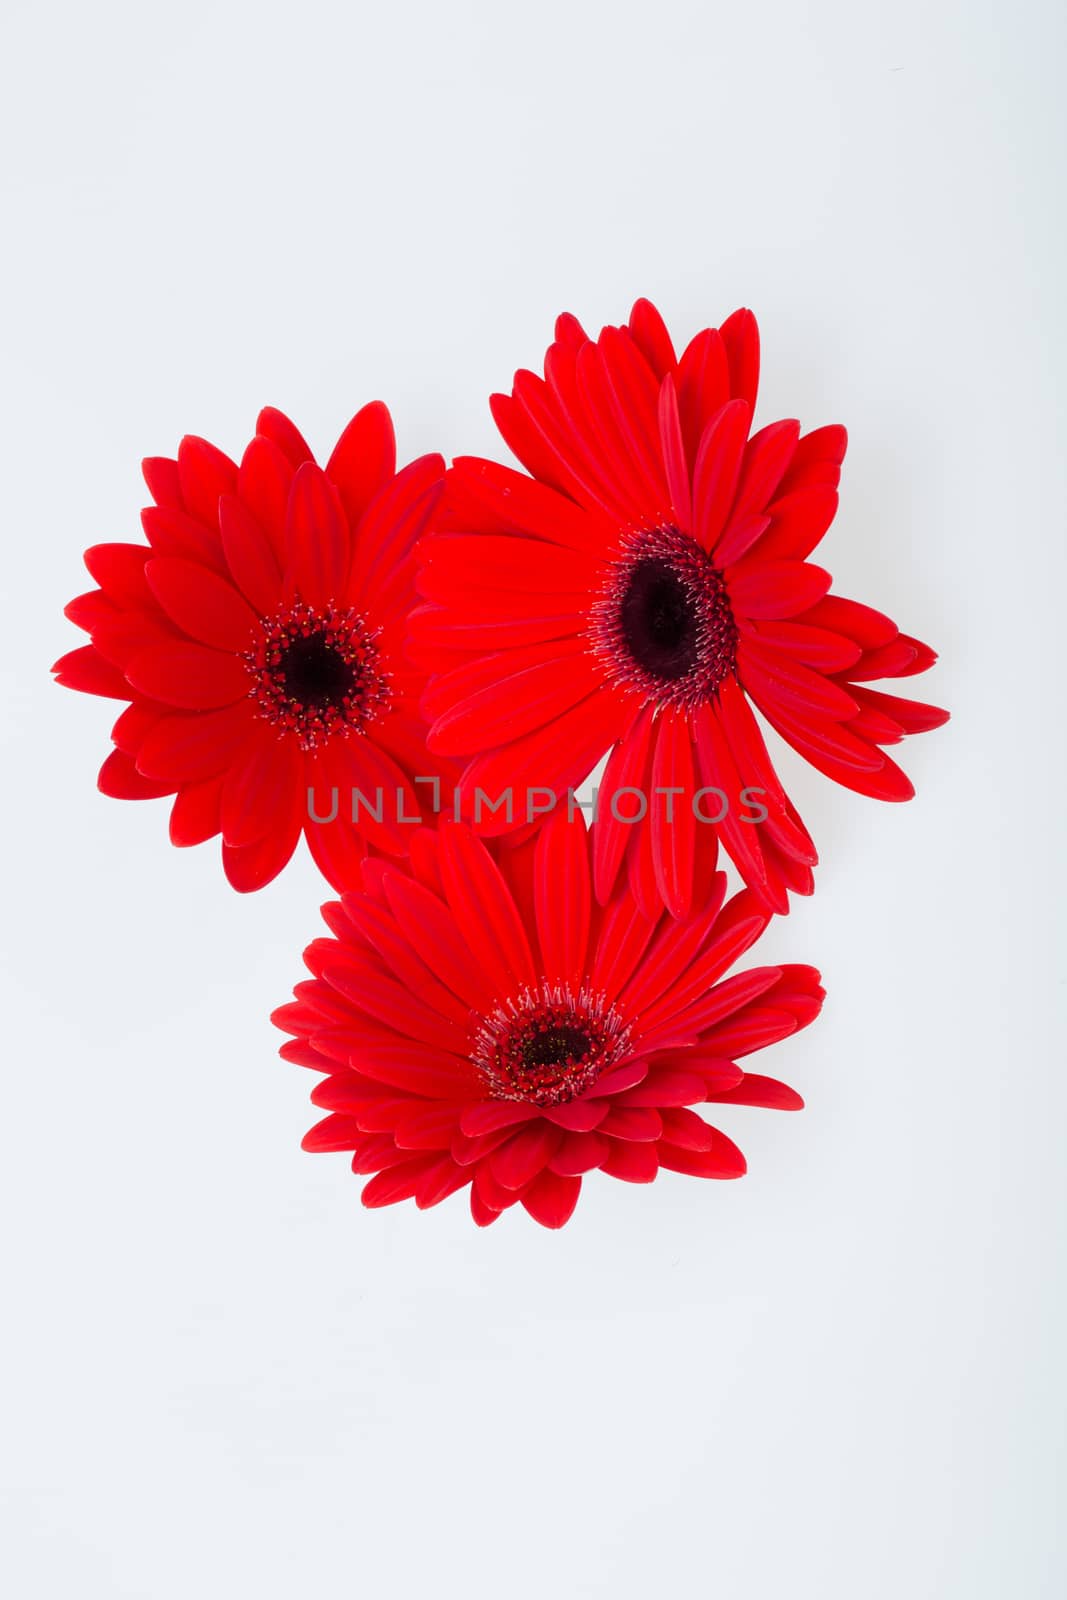  red gerbera daisy flower by wjarek